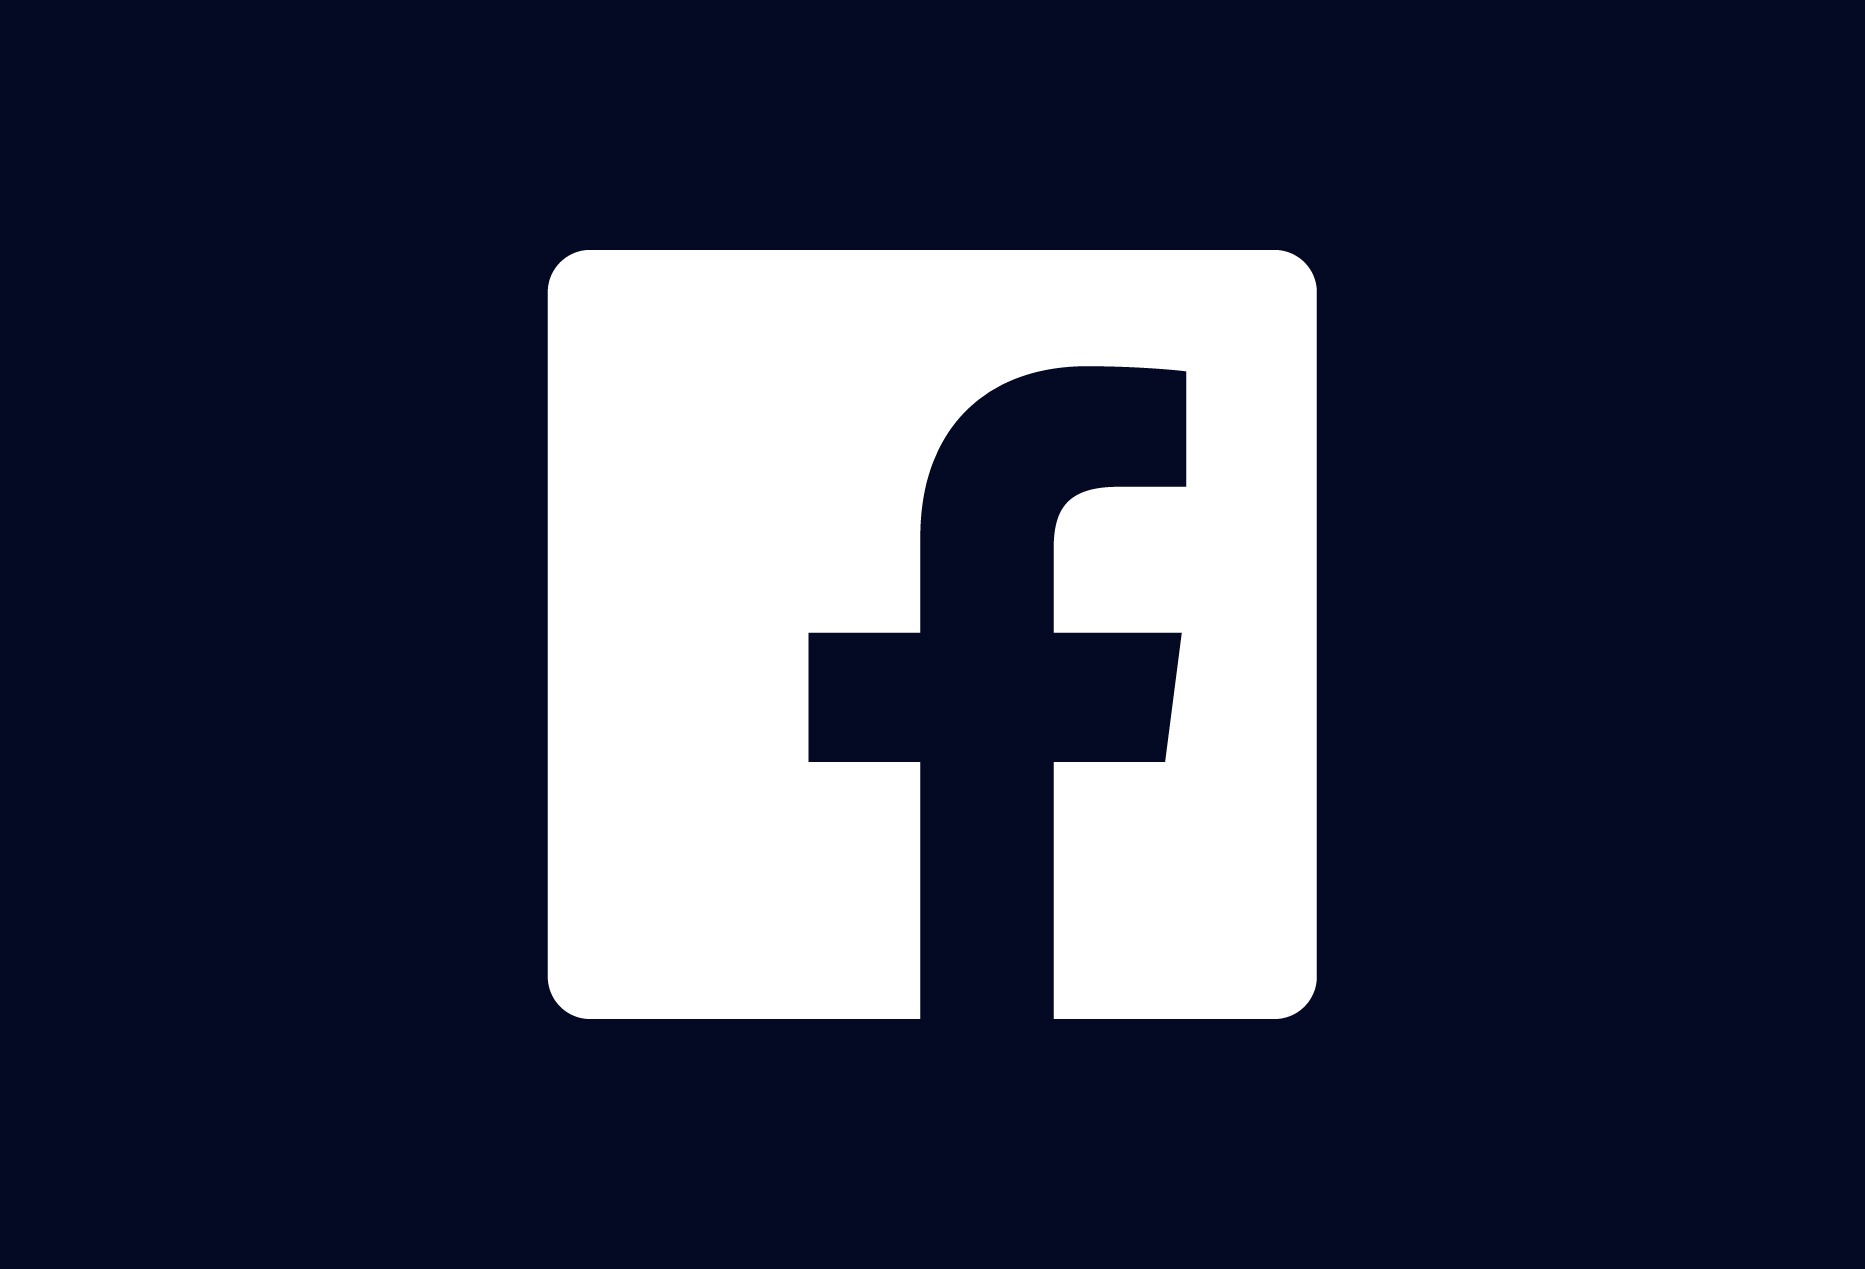 Official Facebook Account